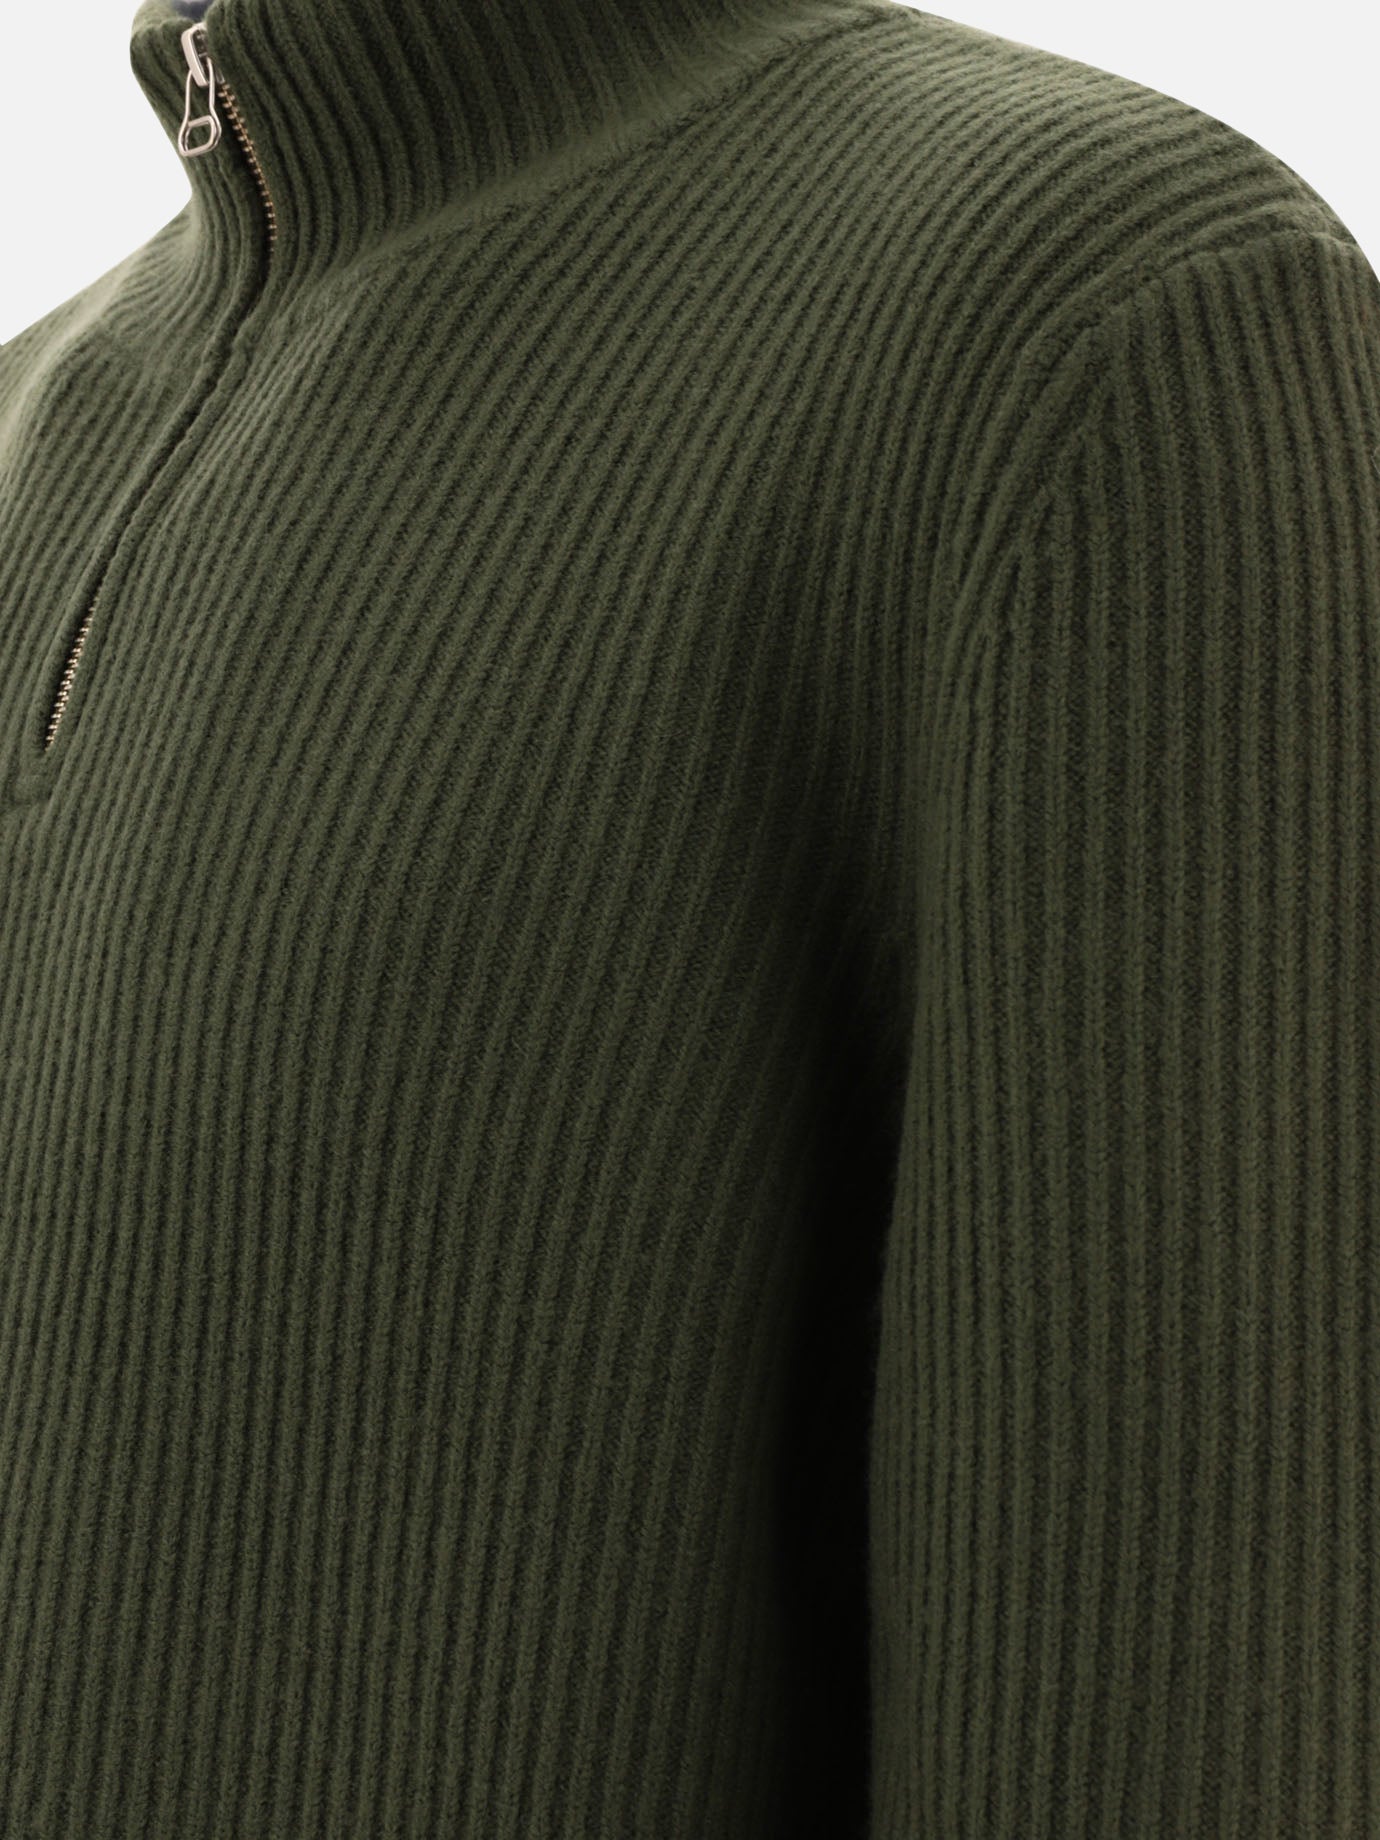 "Alex" sweater